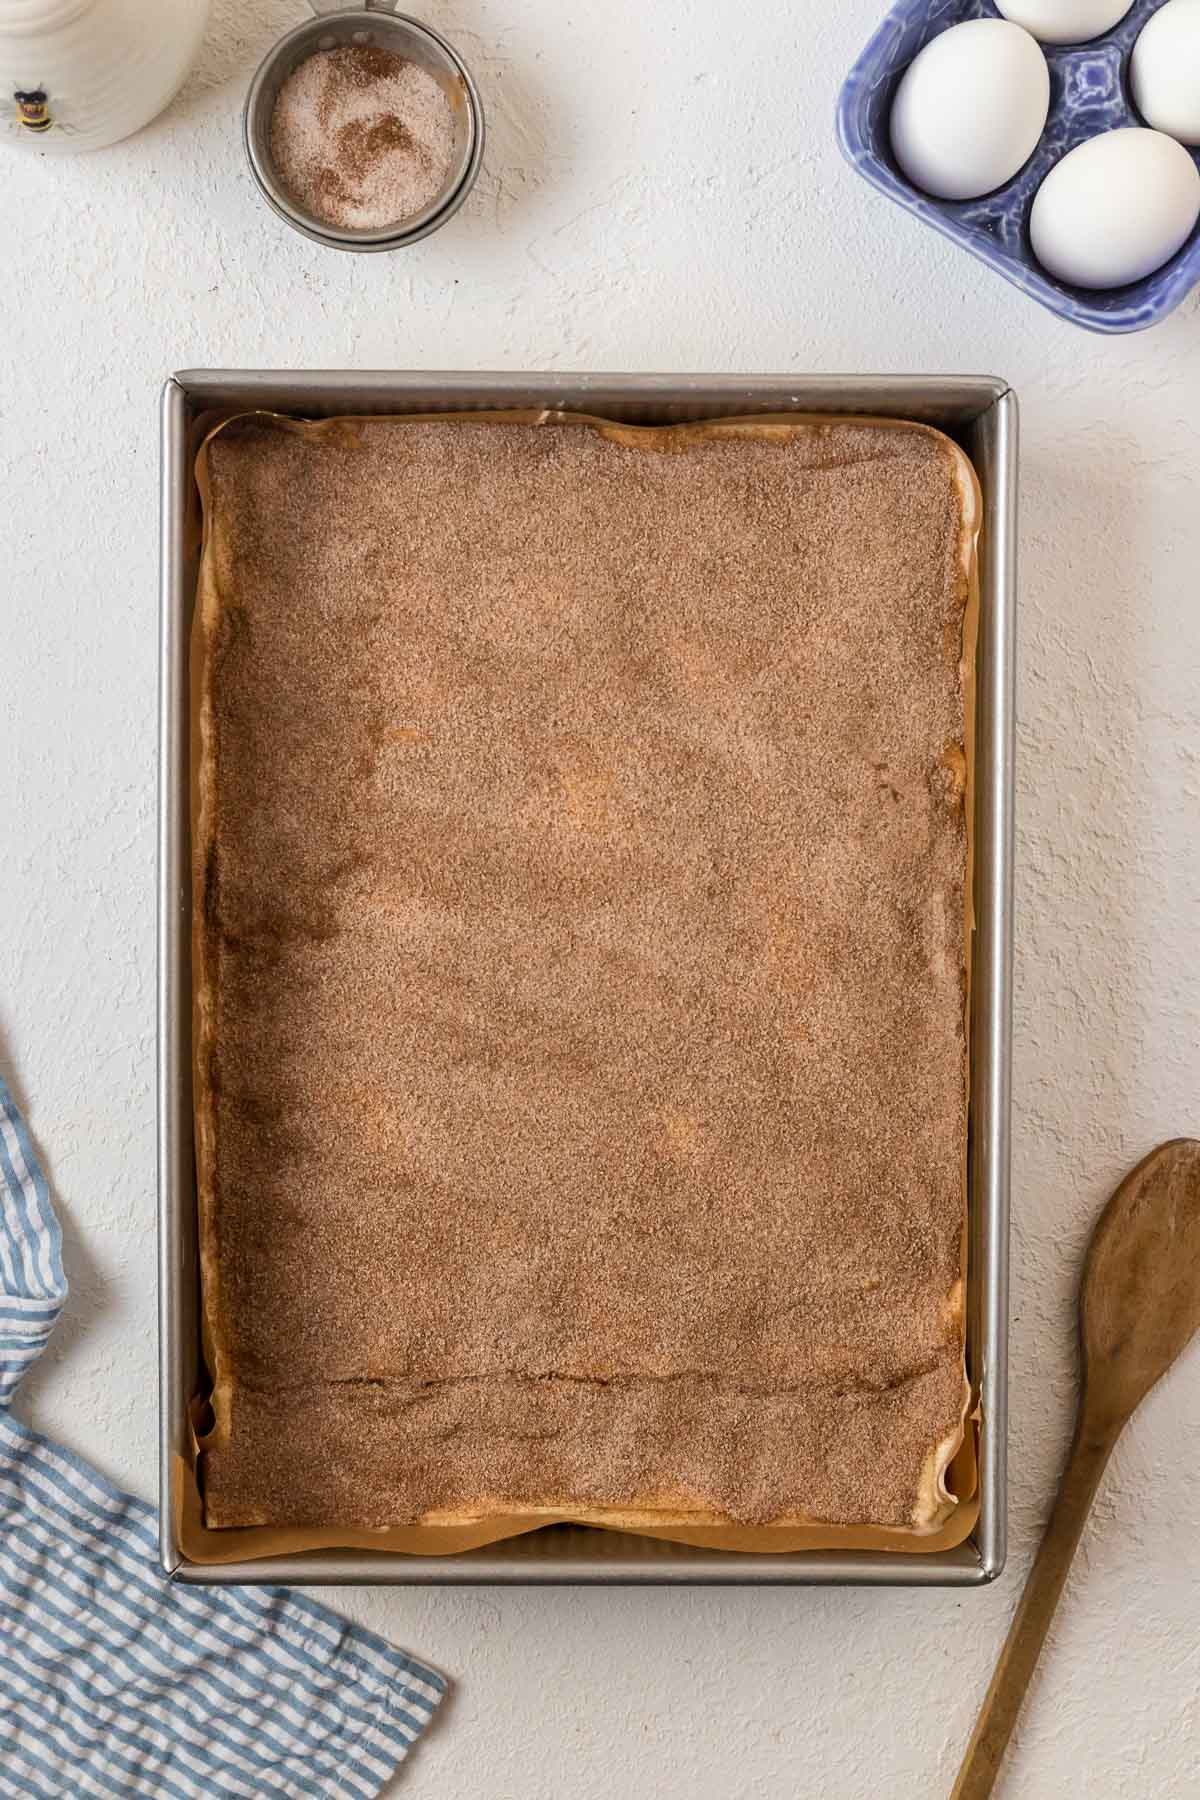 cinnamon sugar dusted on top of cheesecake bars